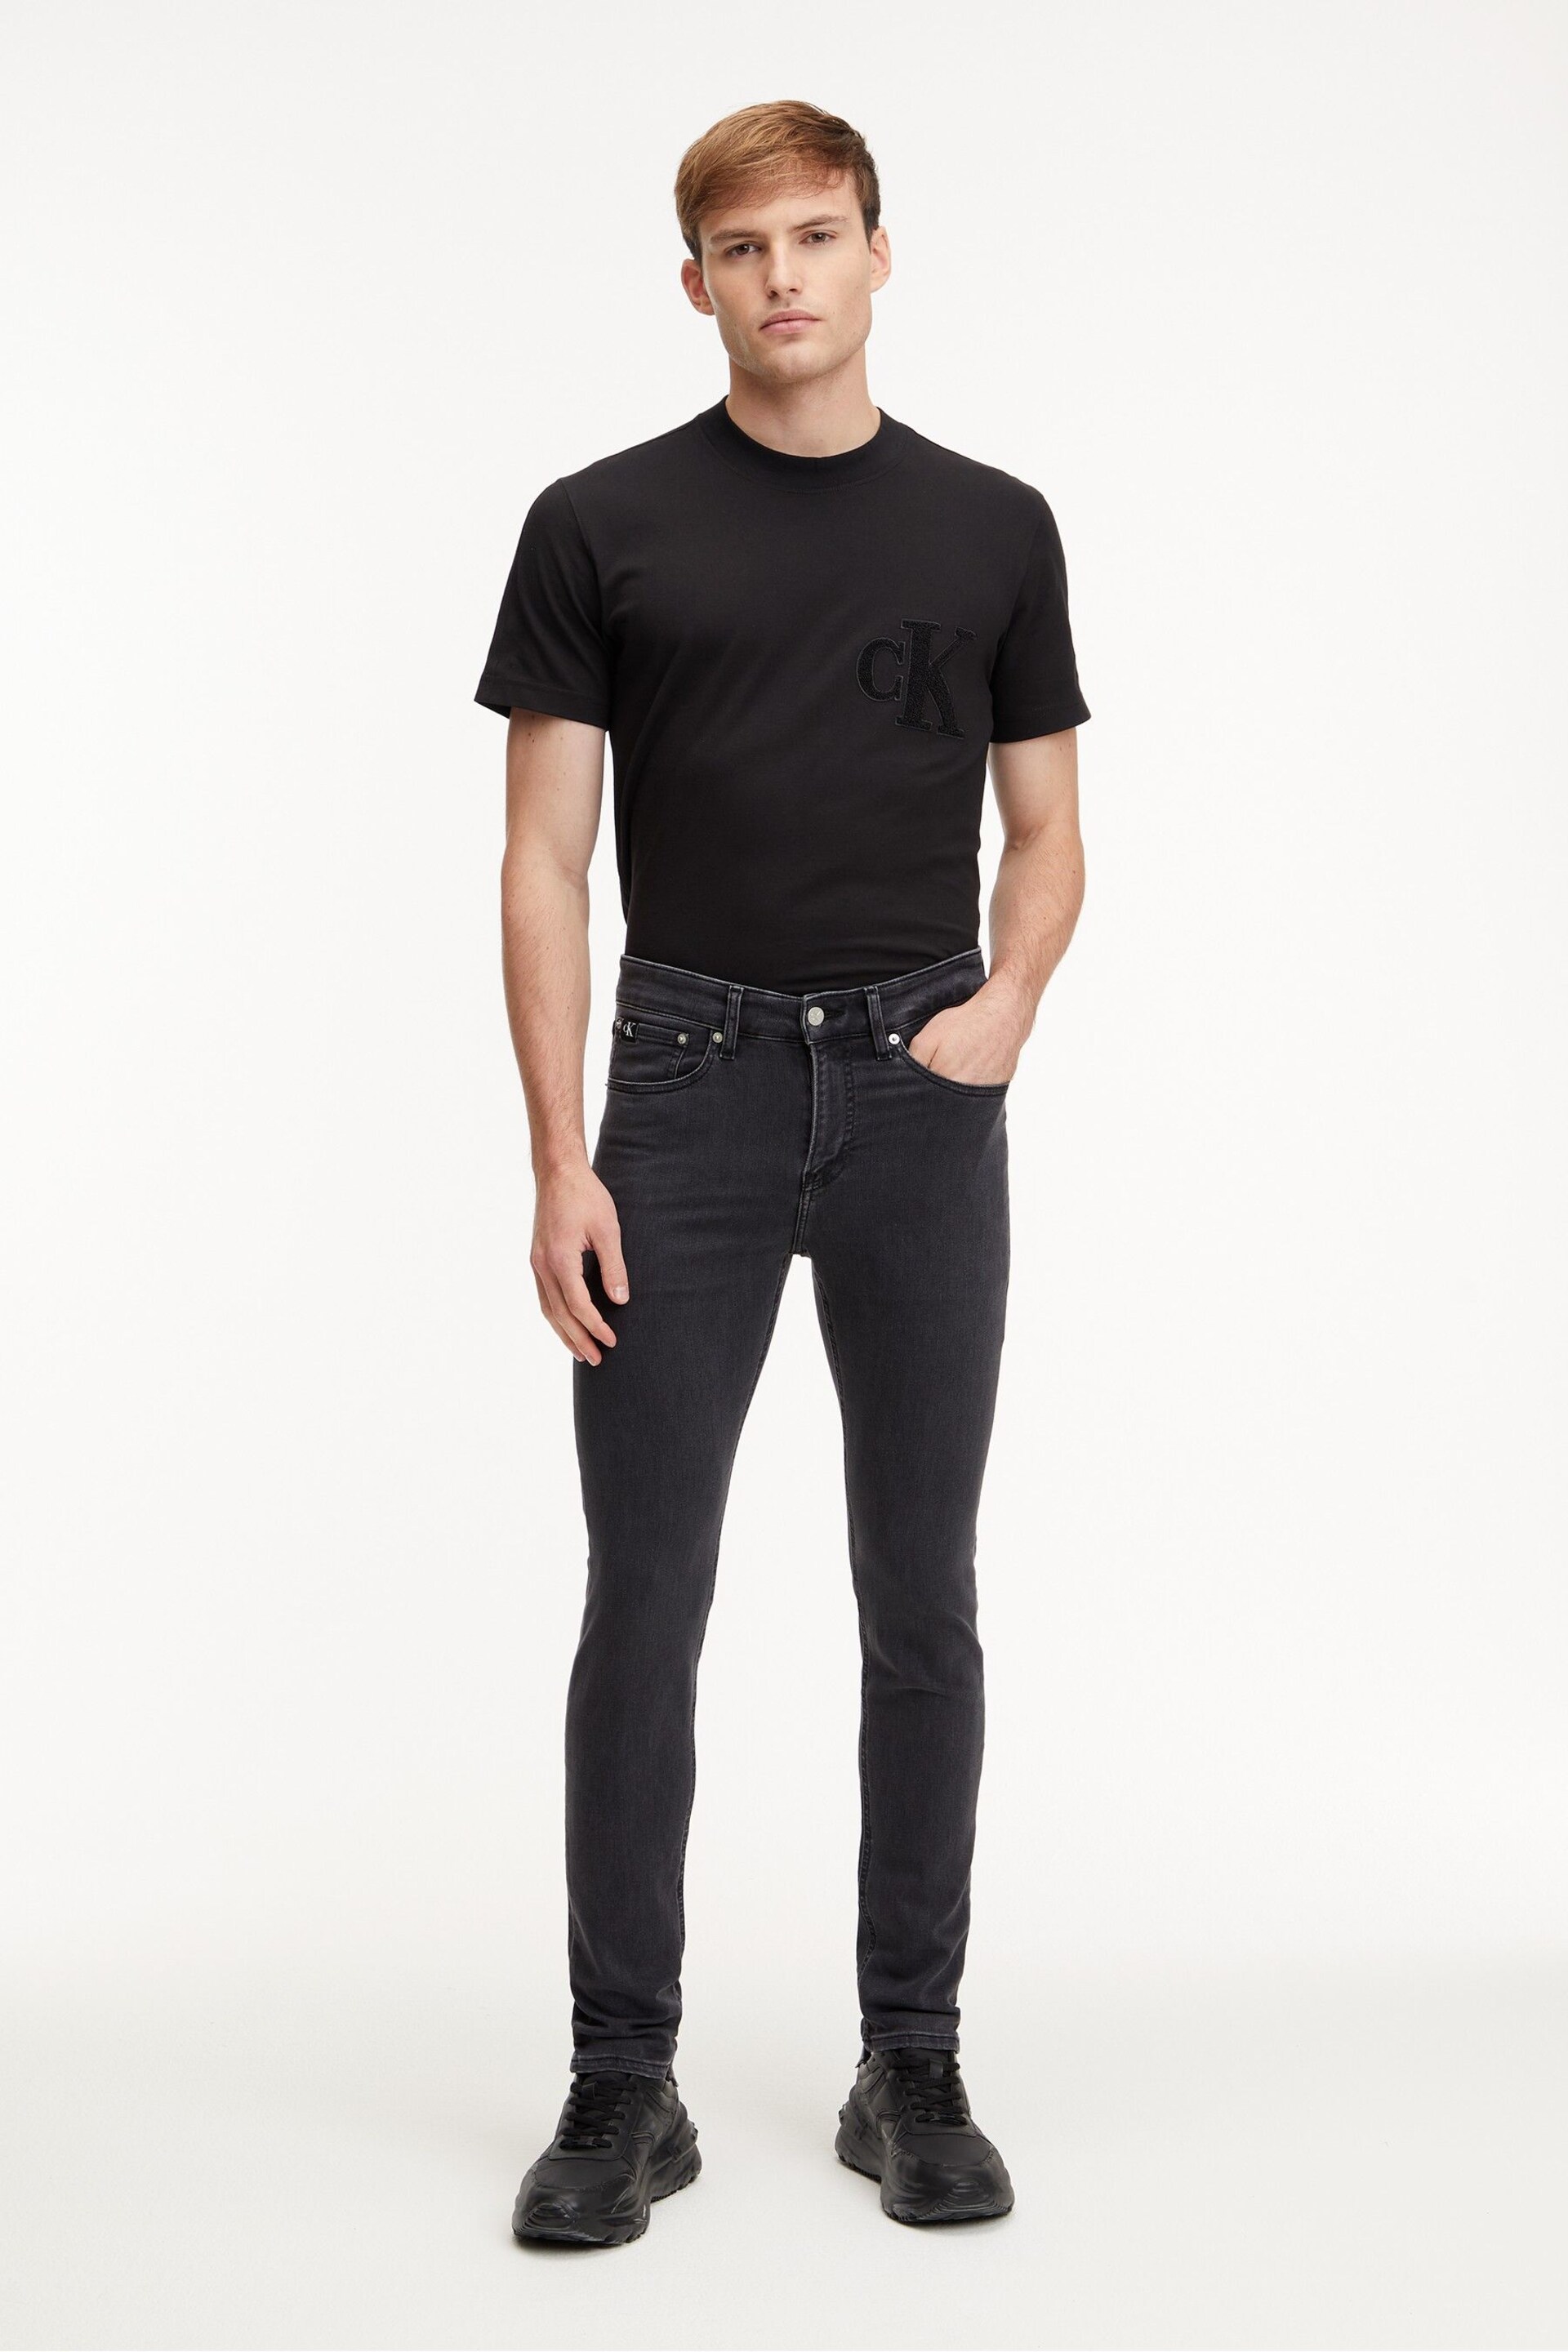 Calvin Klein Jeans Grey Skinny Jeans - Image 3 of 9